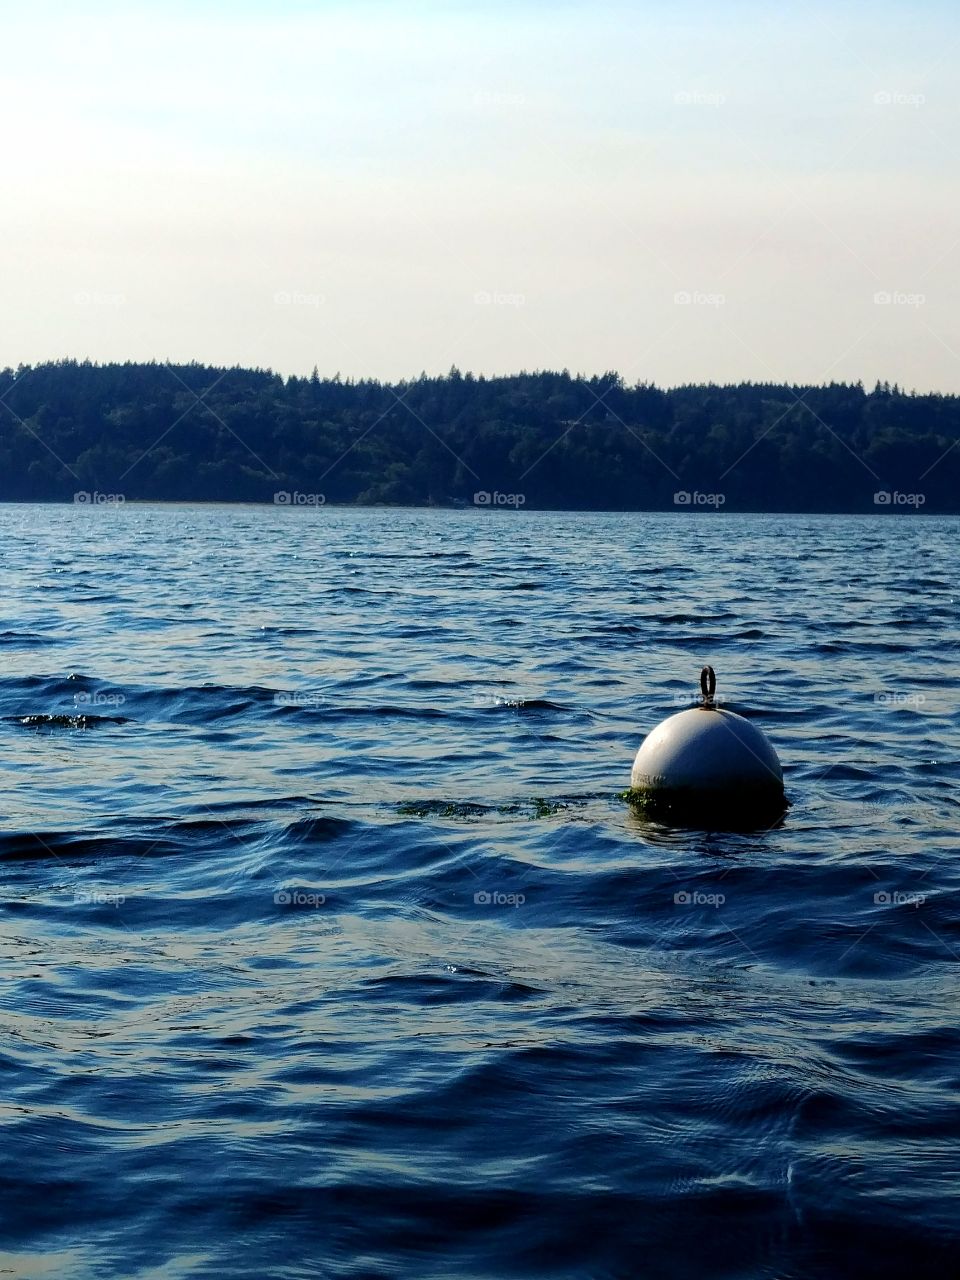 Buoy bouncing beautifully in a brash and brazen way through brackish blue water.